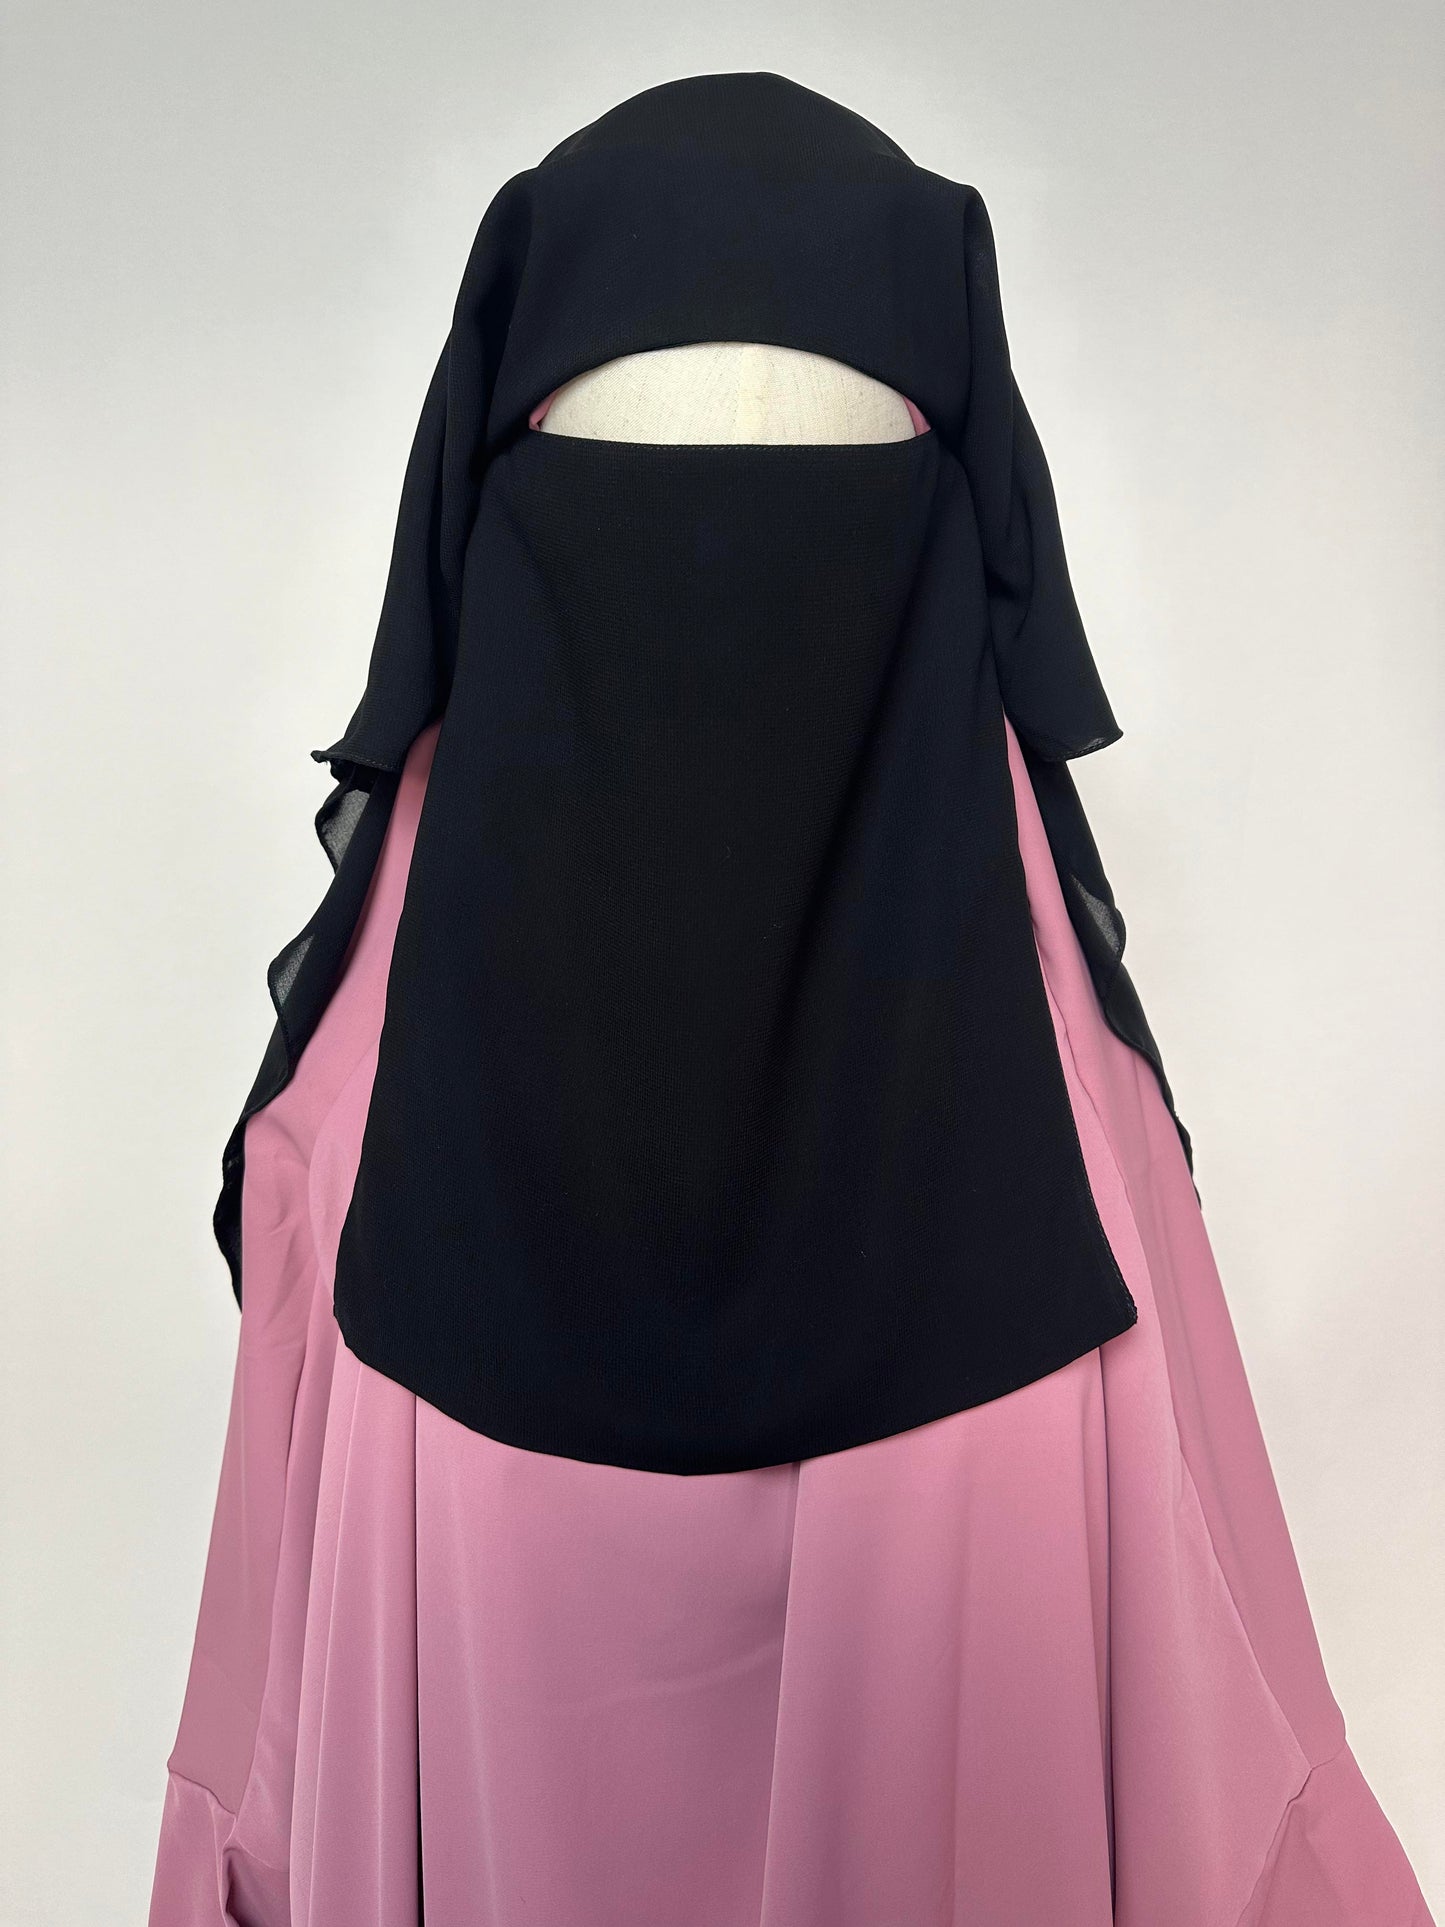 Bedoon Essm Three Layer Niqab - Black